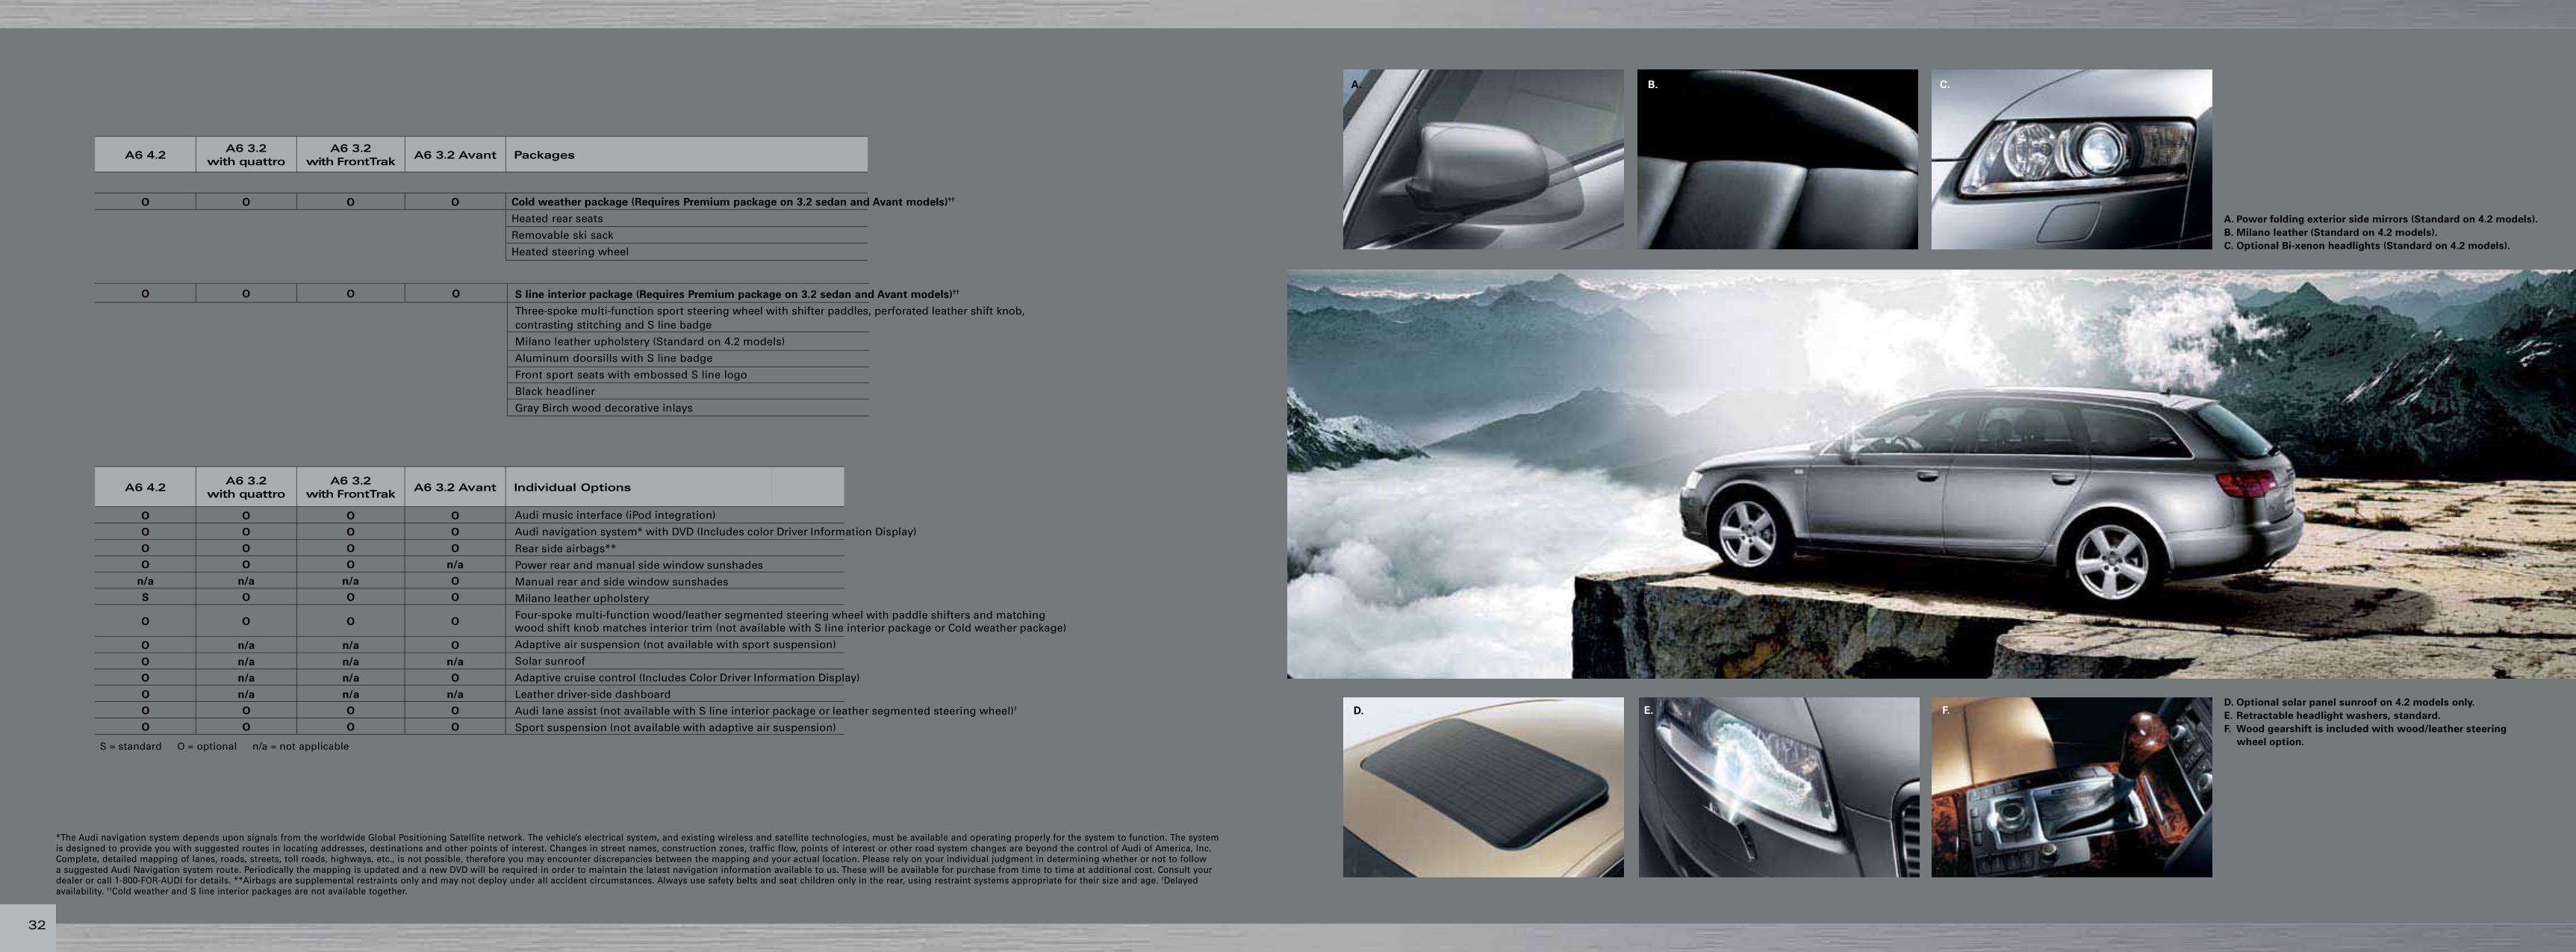 2008 Audi A6 Brochure Page 3